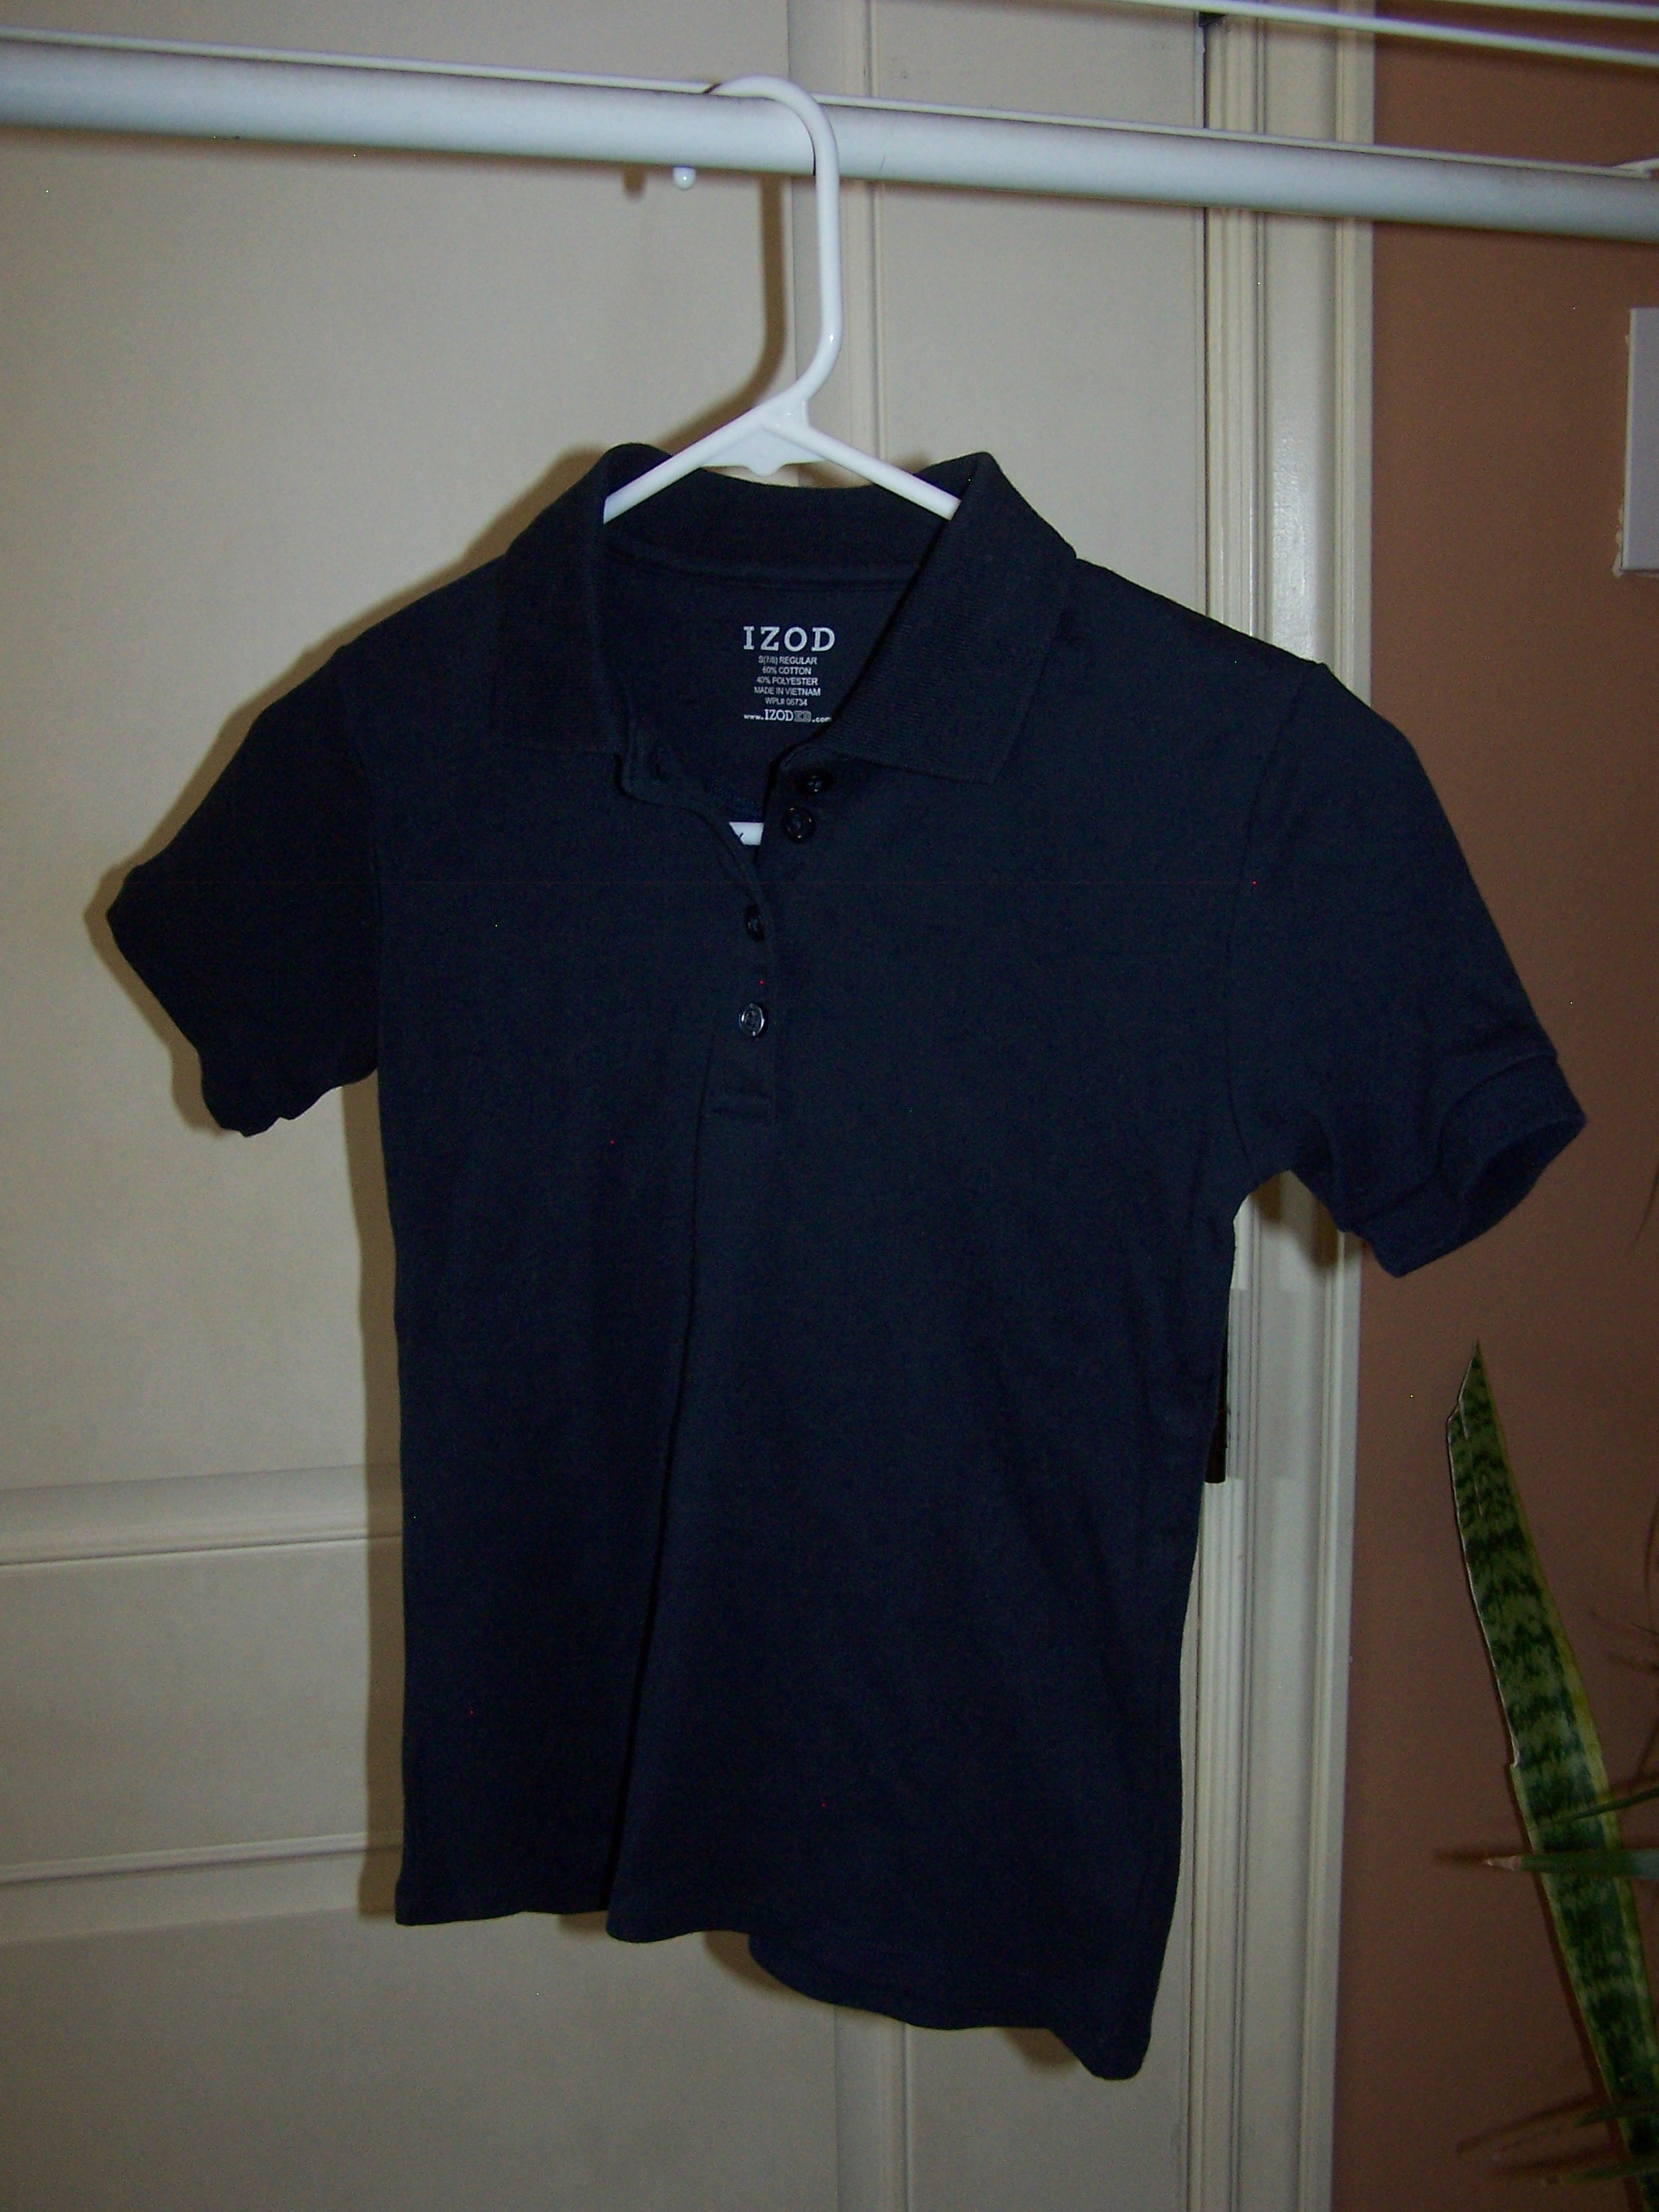 Girls IZOD short sleeve shirt. Navy blue. Uniform quality. Size S